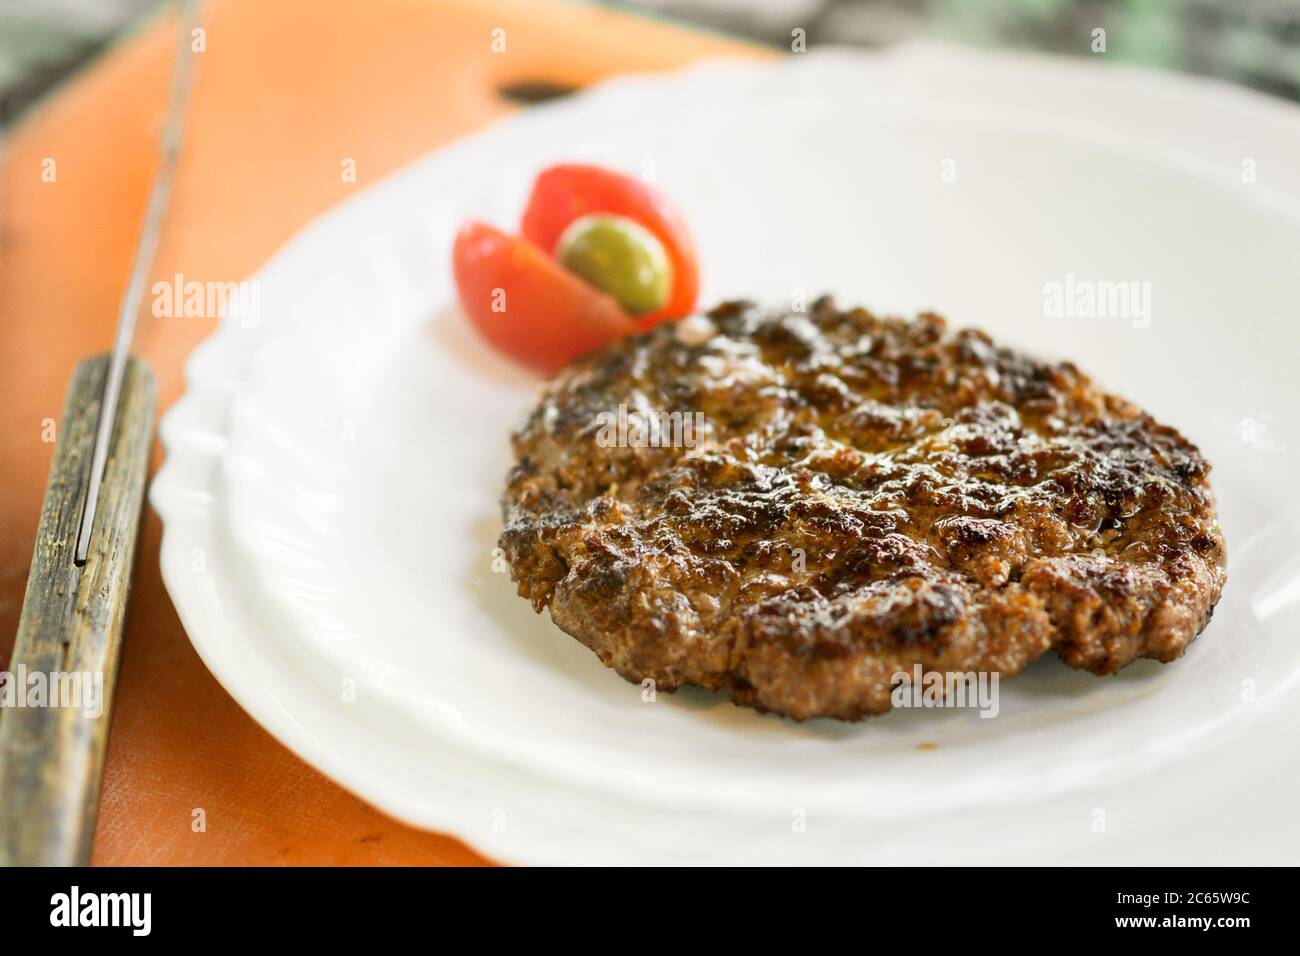 Hamburger patty hi-res stock photography and images - Alamy